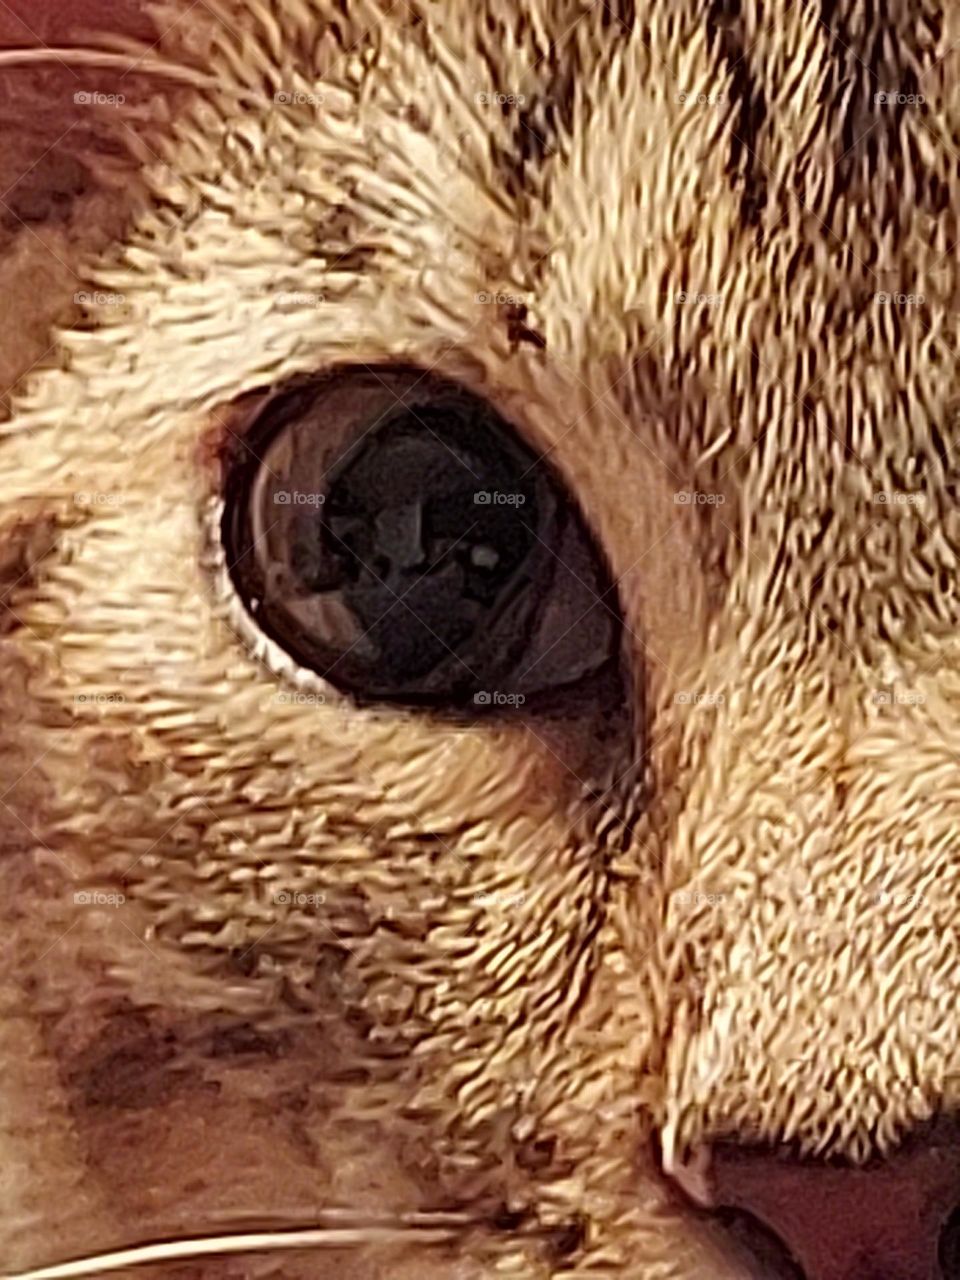 eye up close